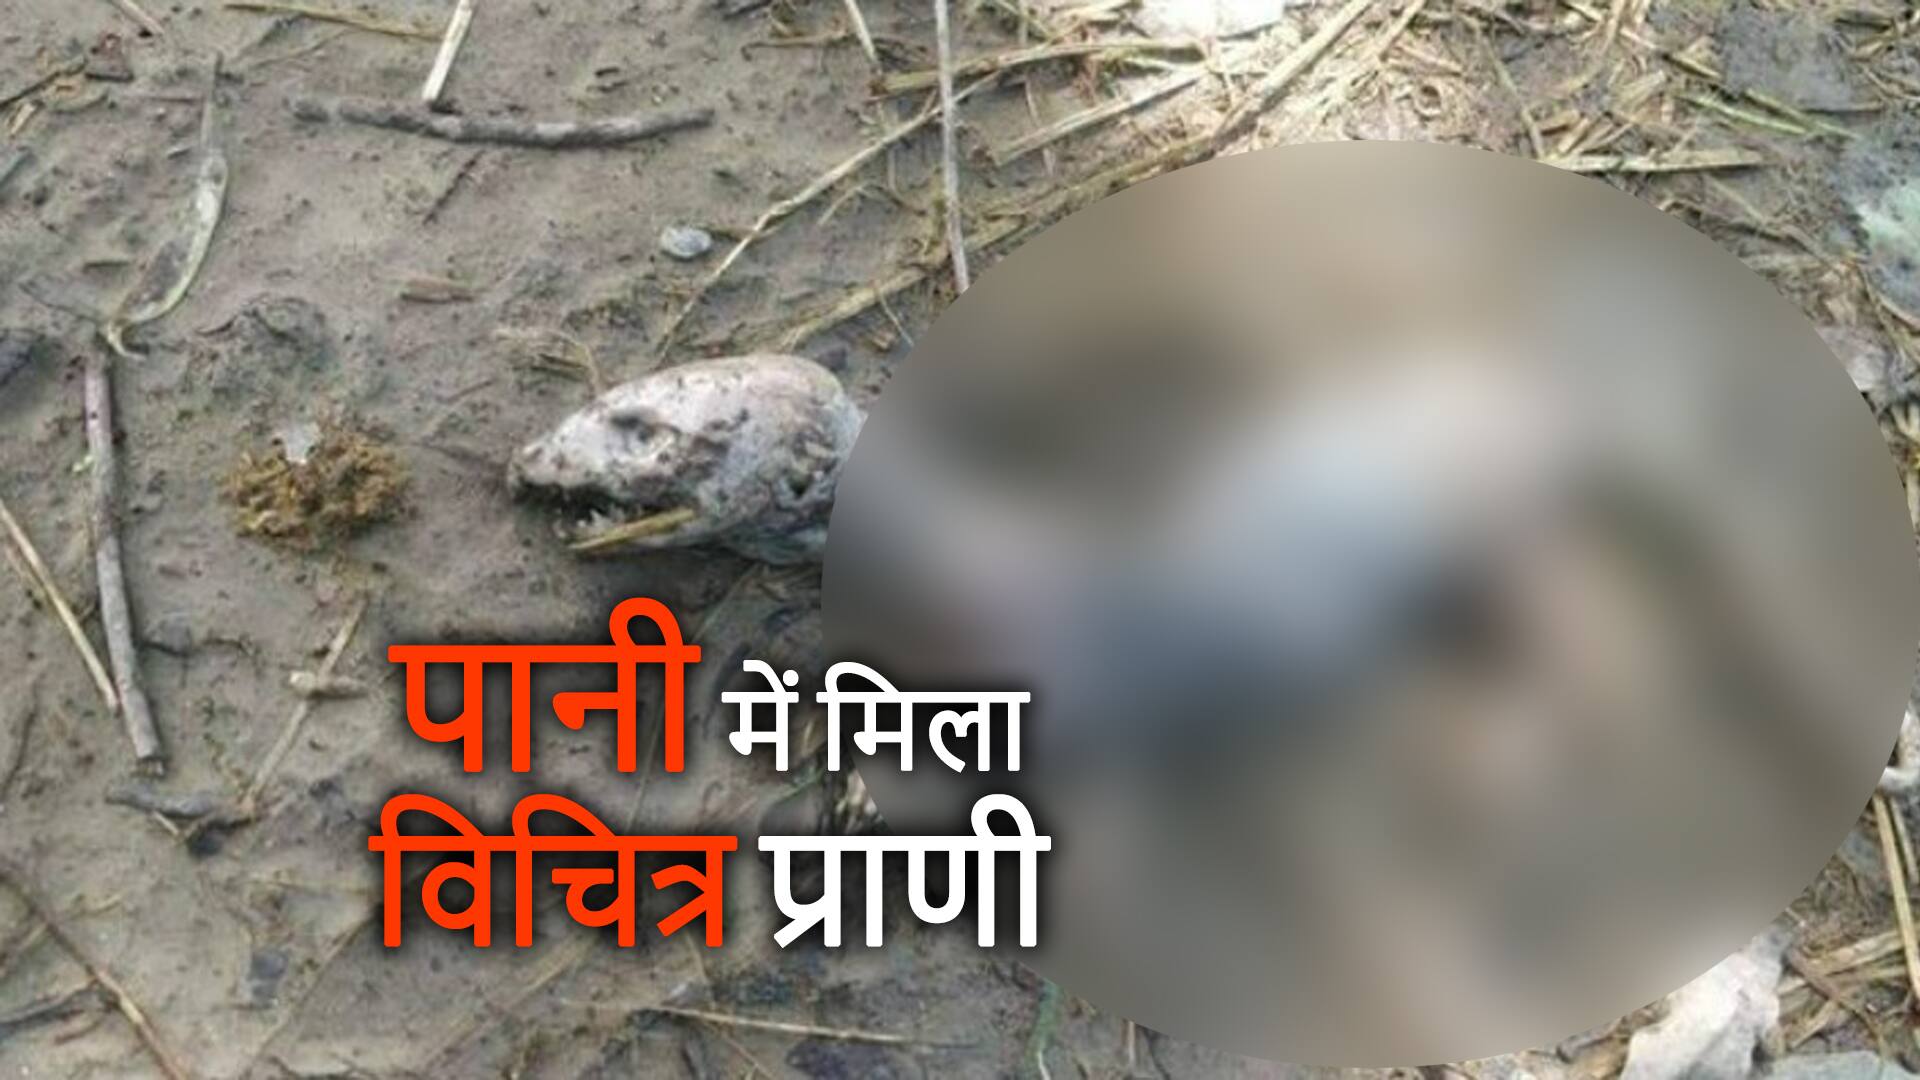 animal like dinosaur found village of saharanpur up